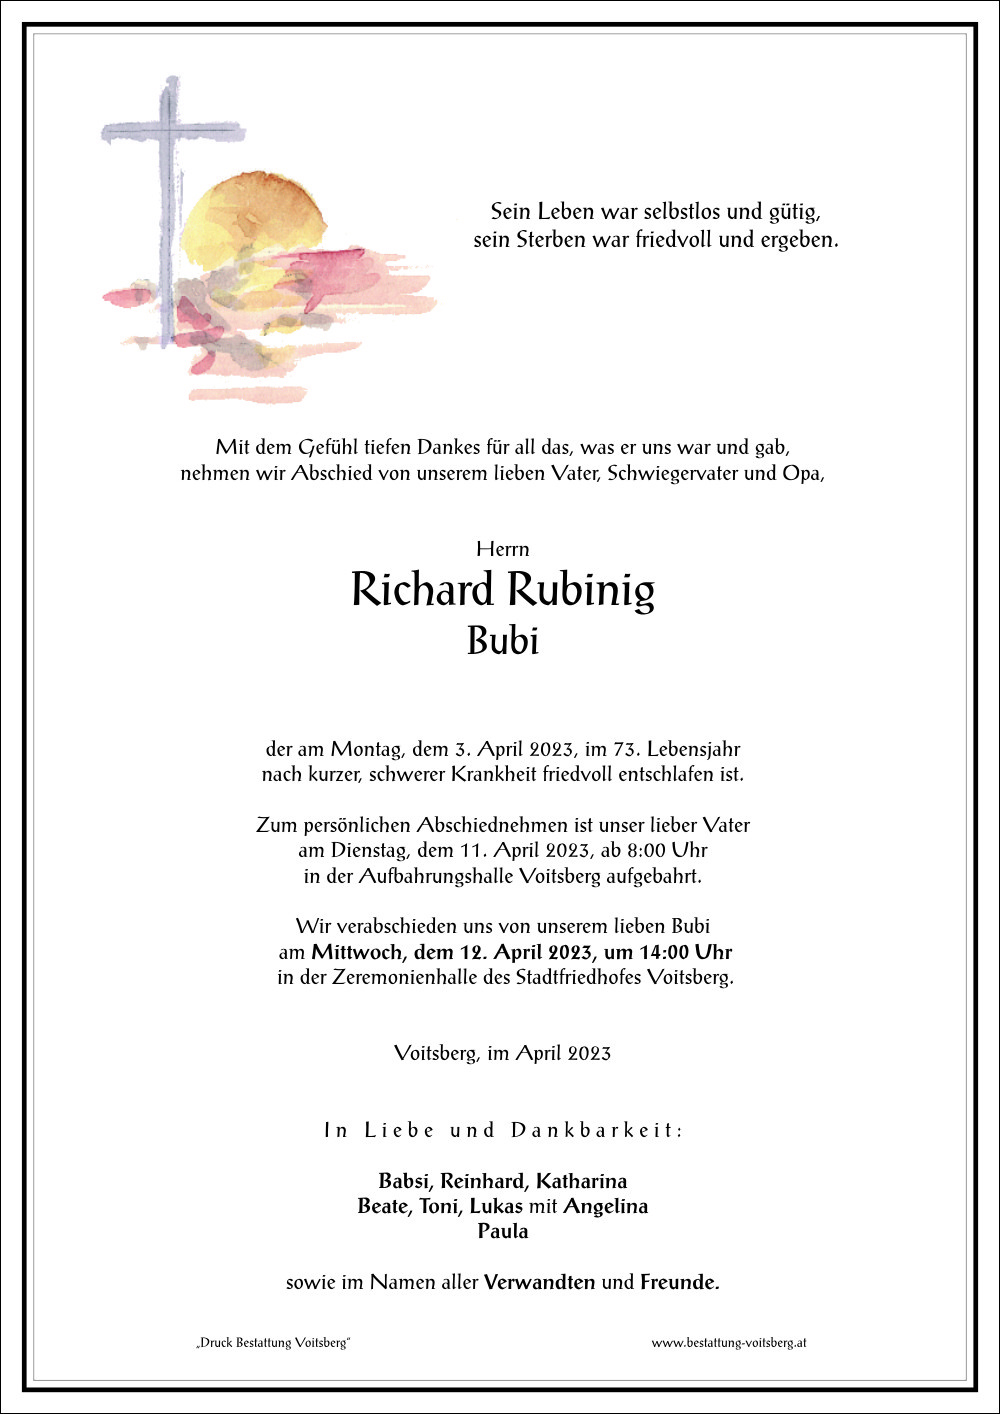 Richard Rubinig